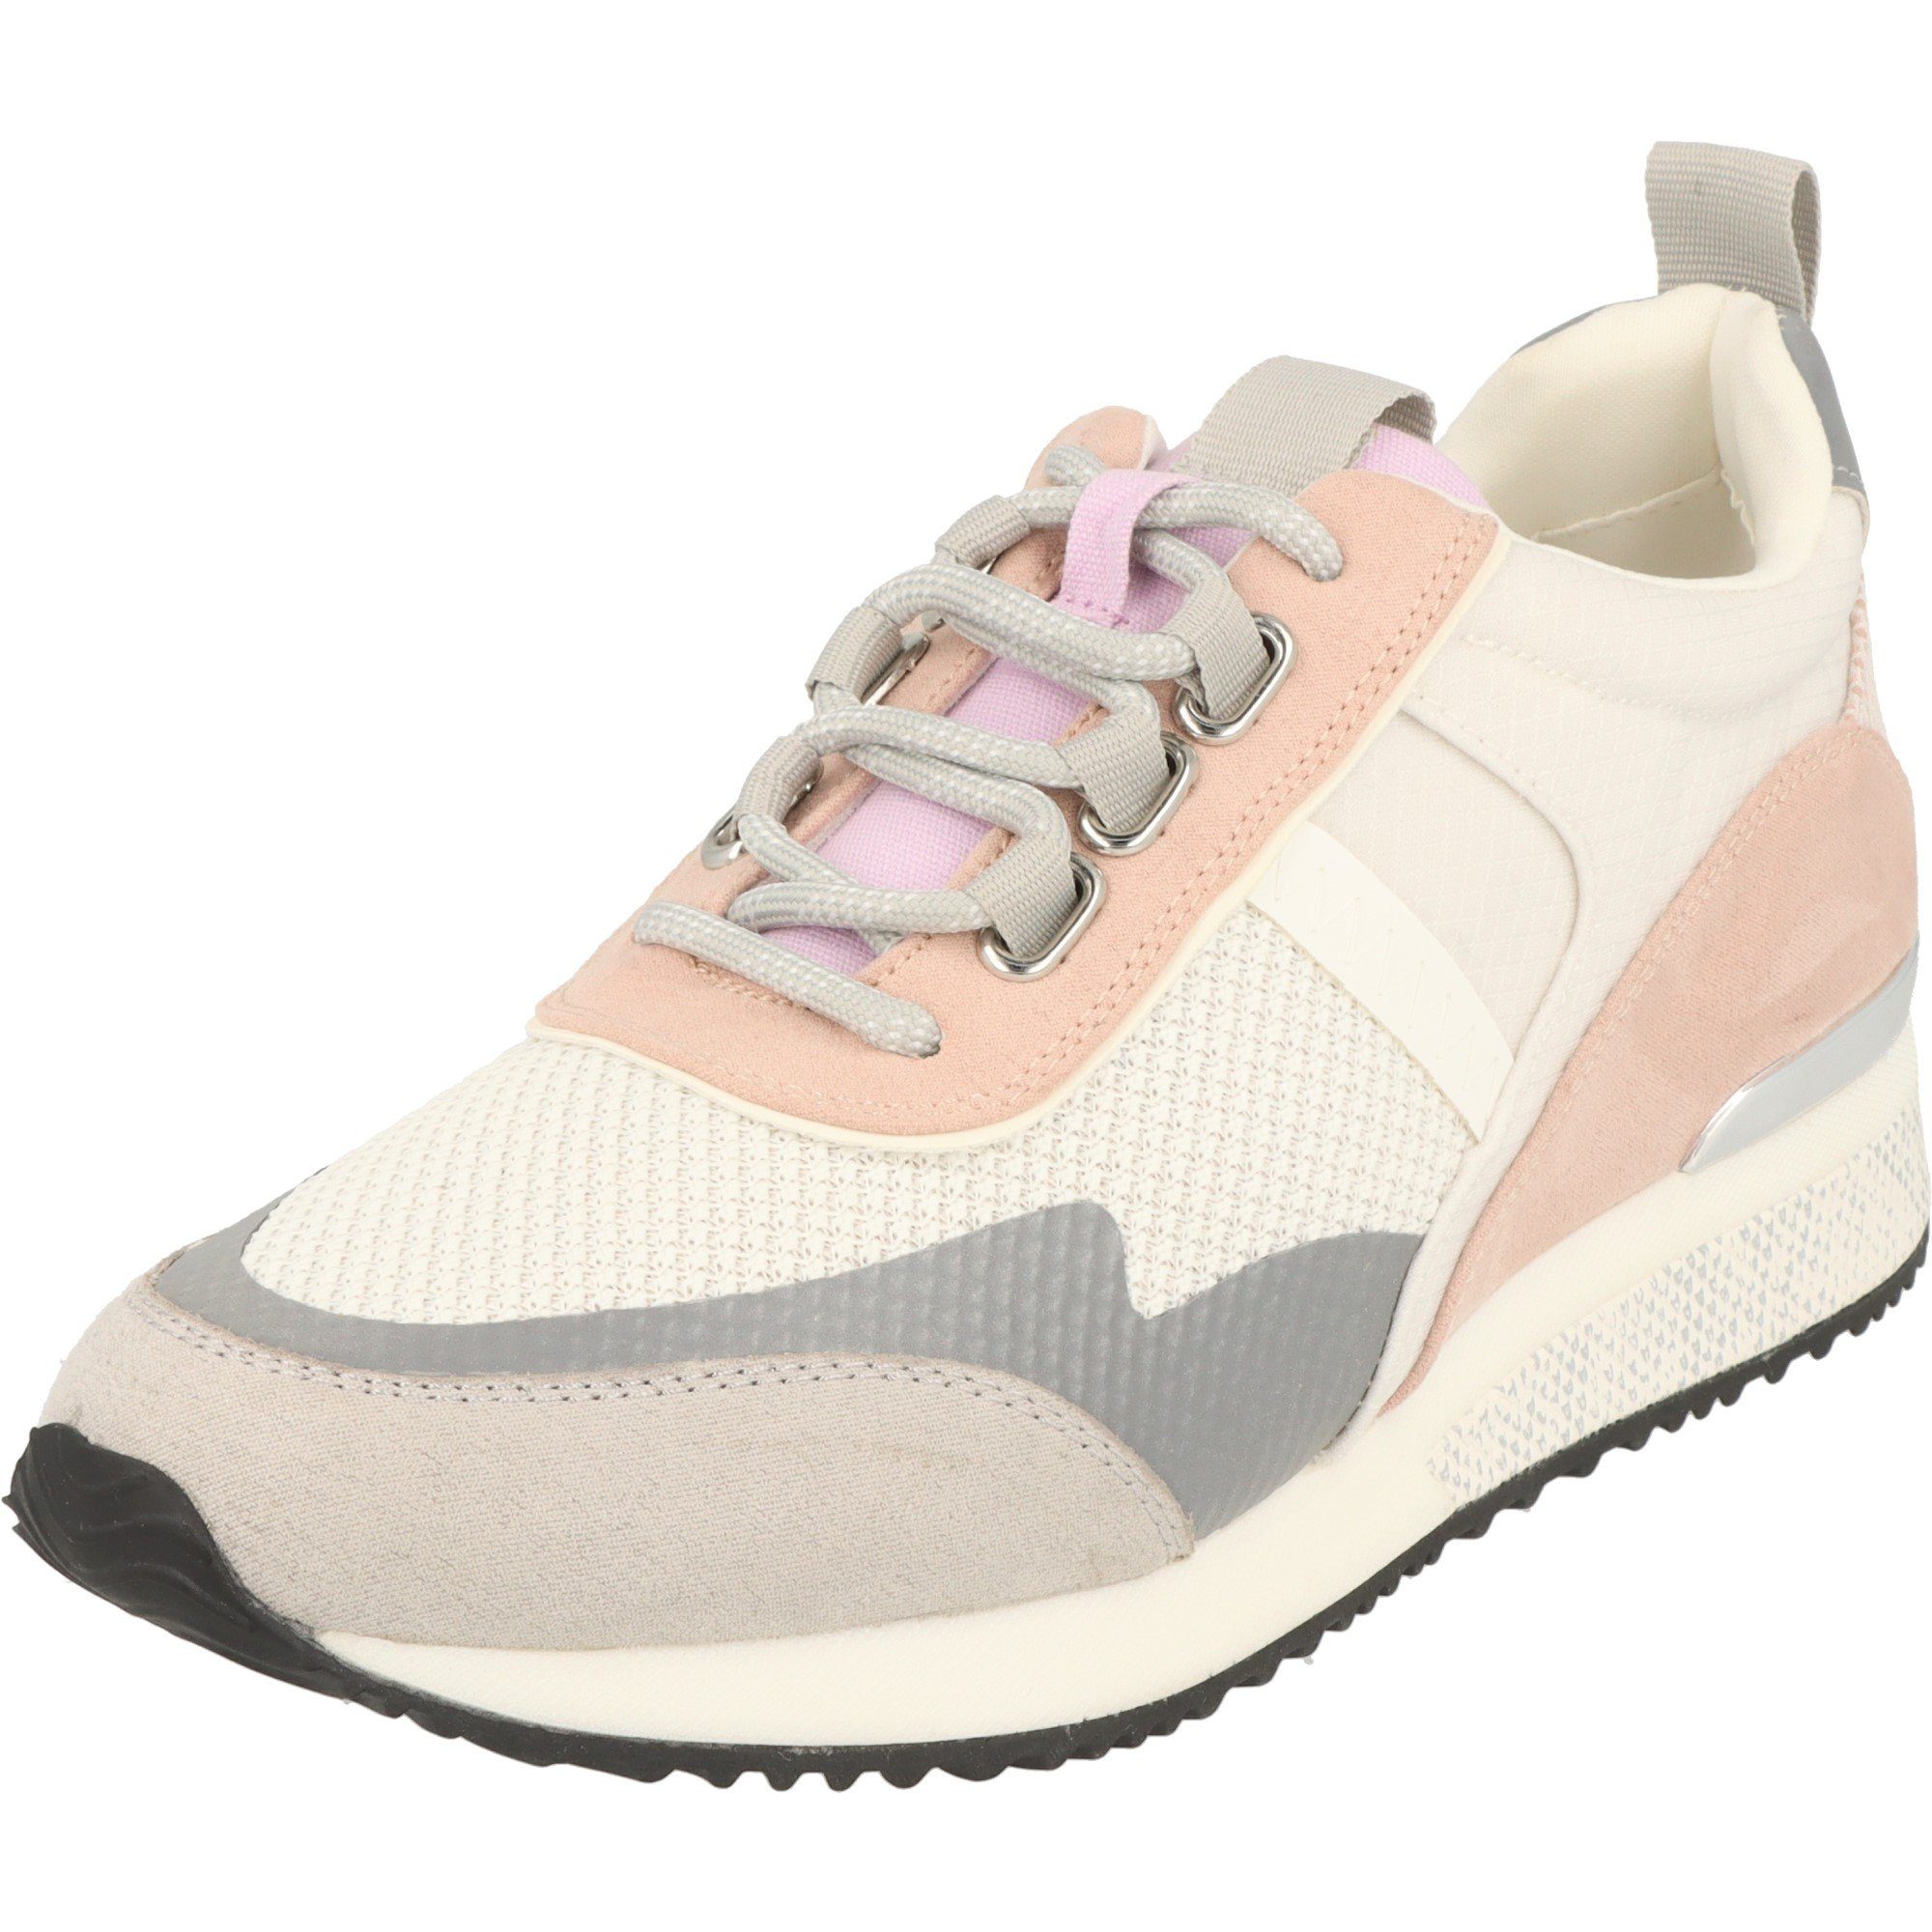 La Strada Damen Schuhe Halbschuhe 2003156-1002 Lt.Grey-Pink Multi Sneaker schwarz